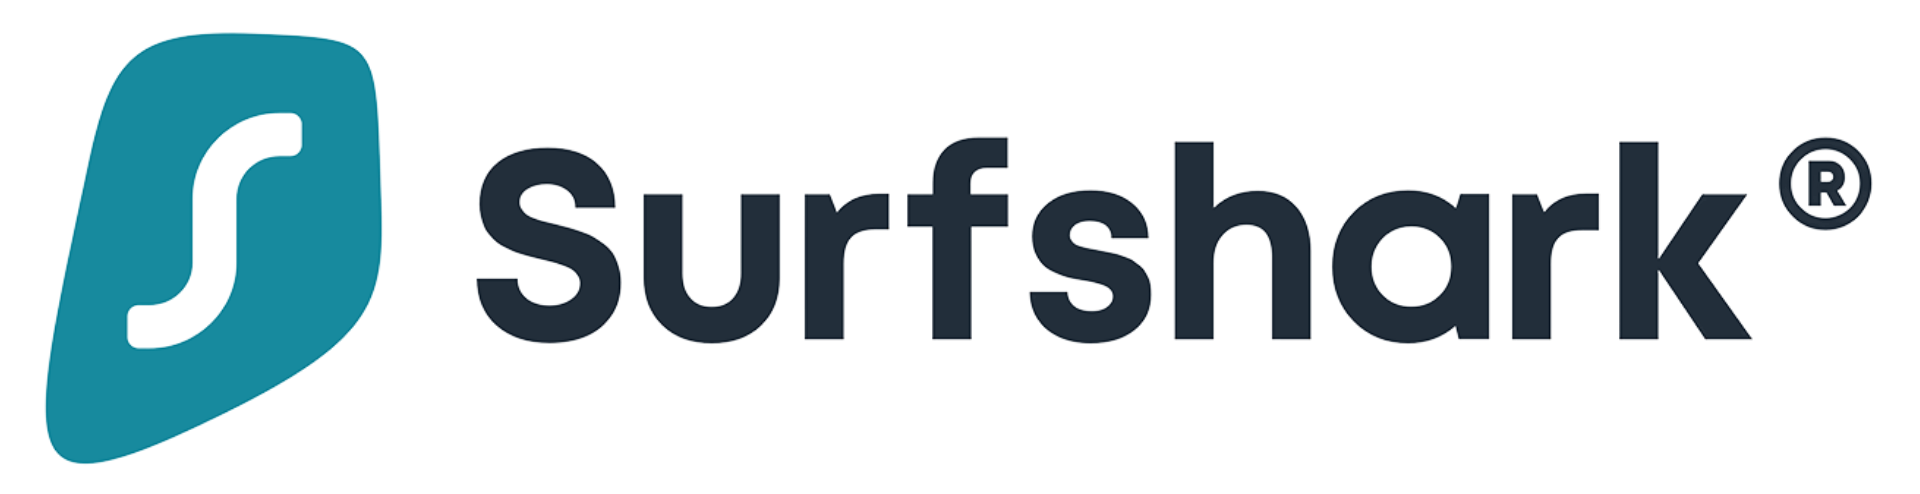 Hulu in Brazil - Surfshark logo